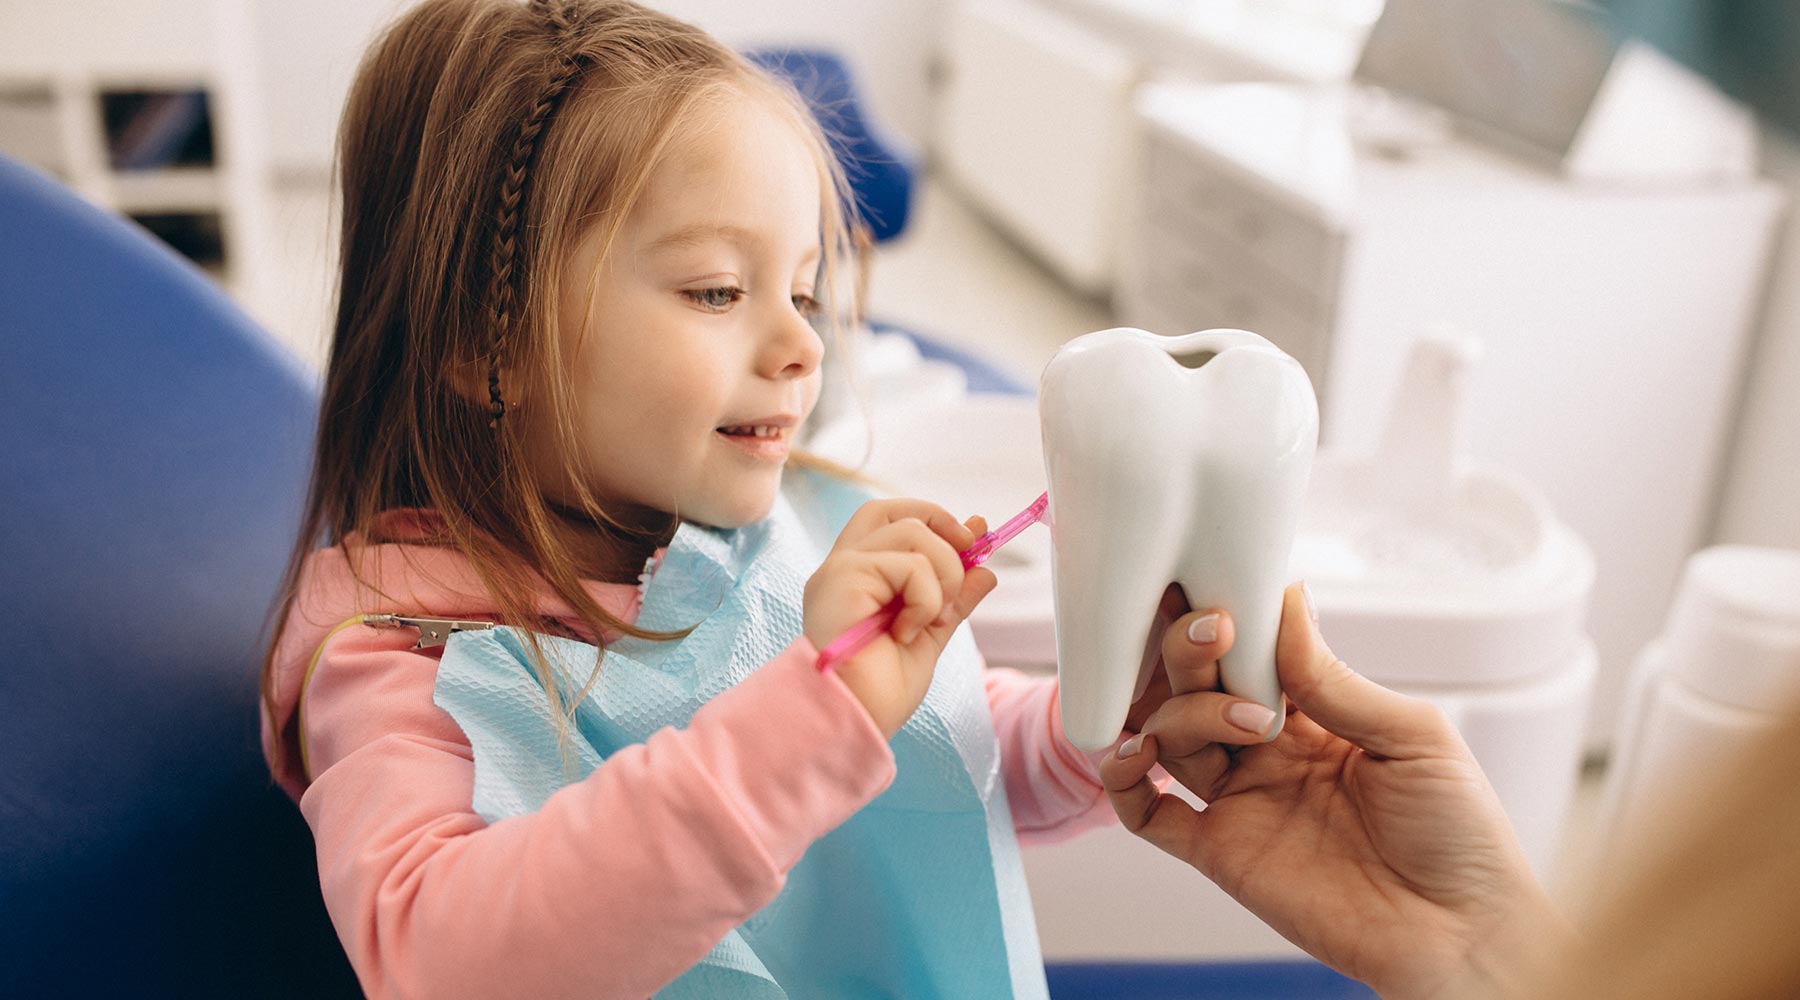 What do dental hygienists do?